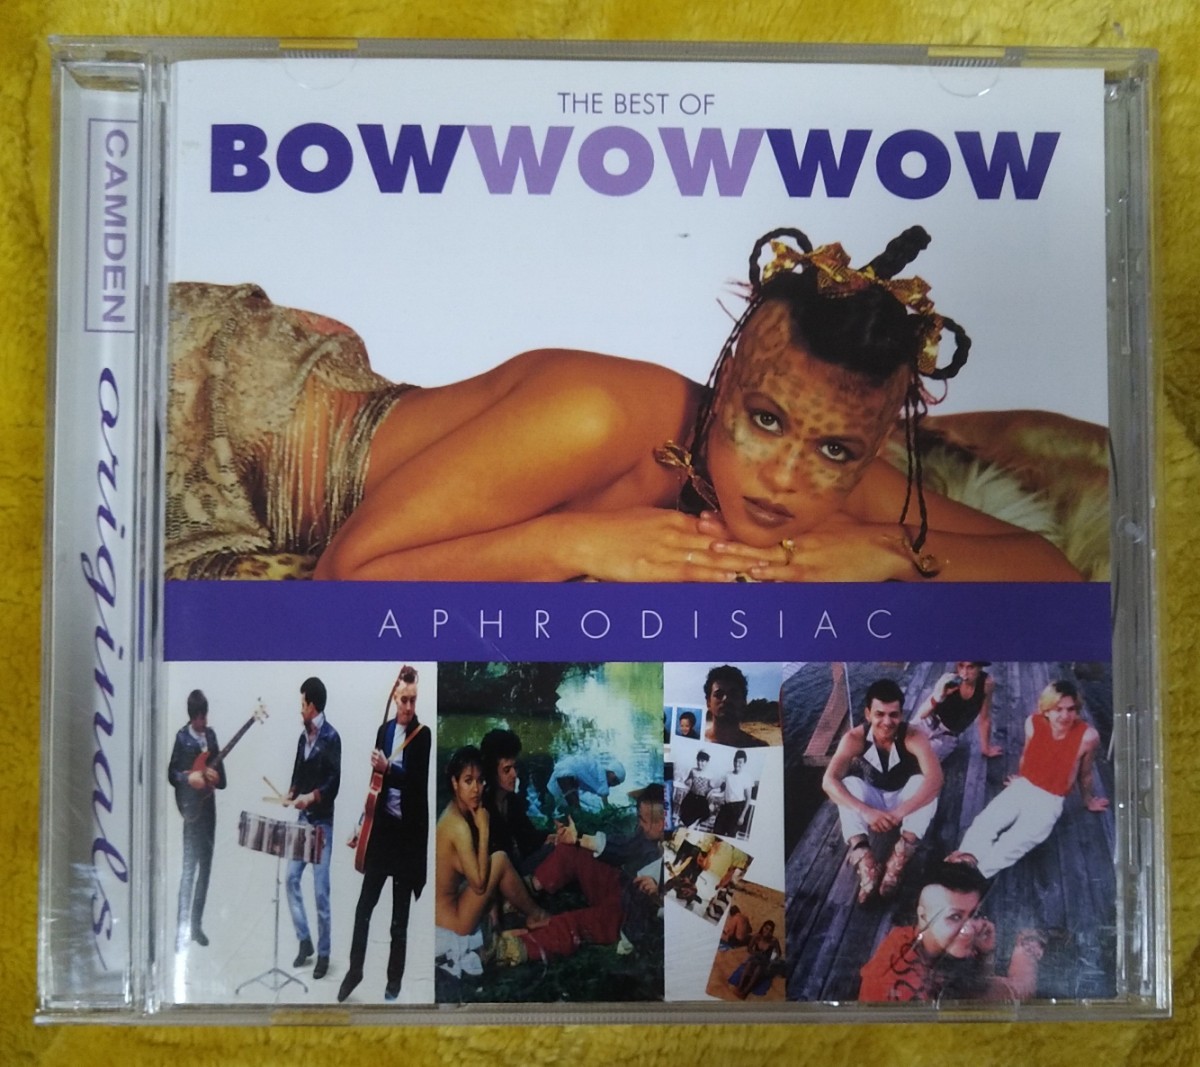 the best of bow wow wow 廃盤輸入盤中古CD ザ・ベスト・オブ バウワウワウ APHRODISIAC malcolm maclaren 74321 419672_画像1